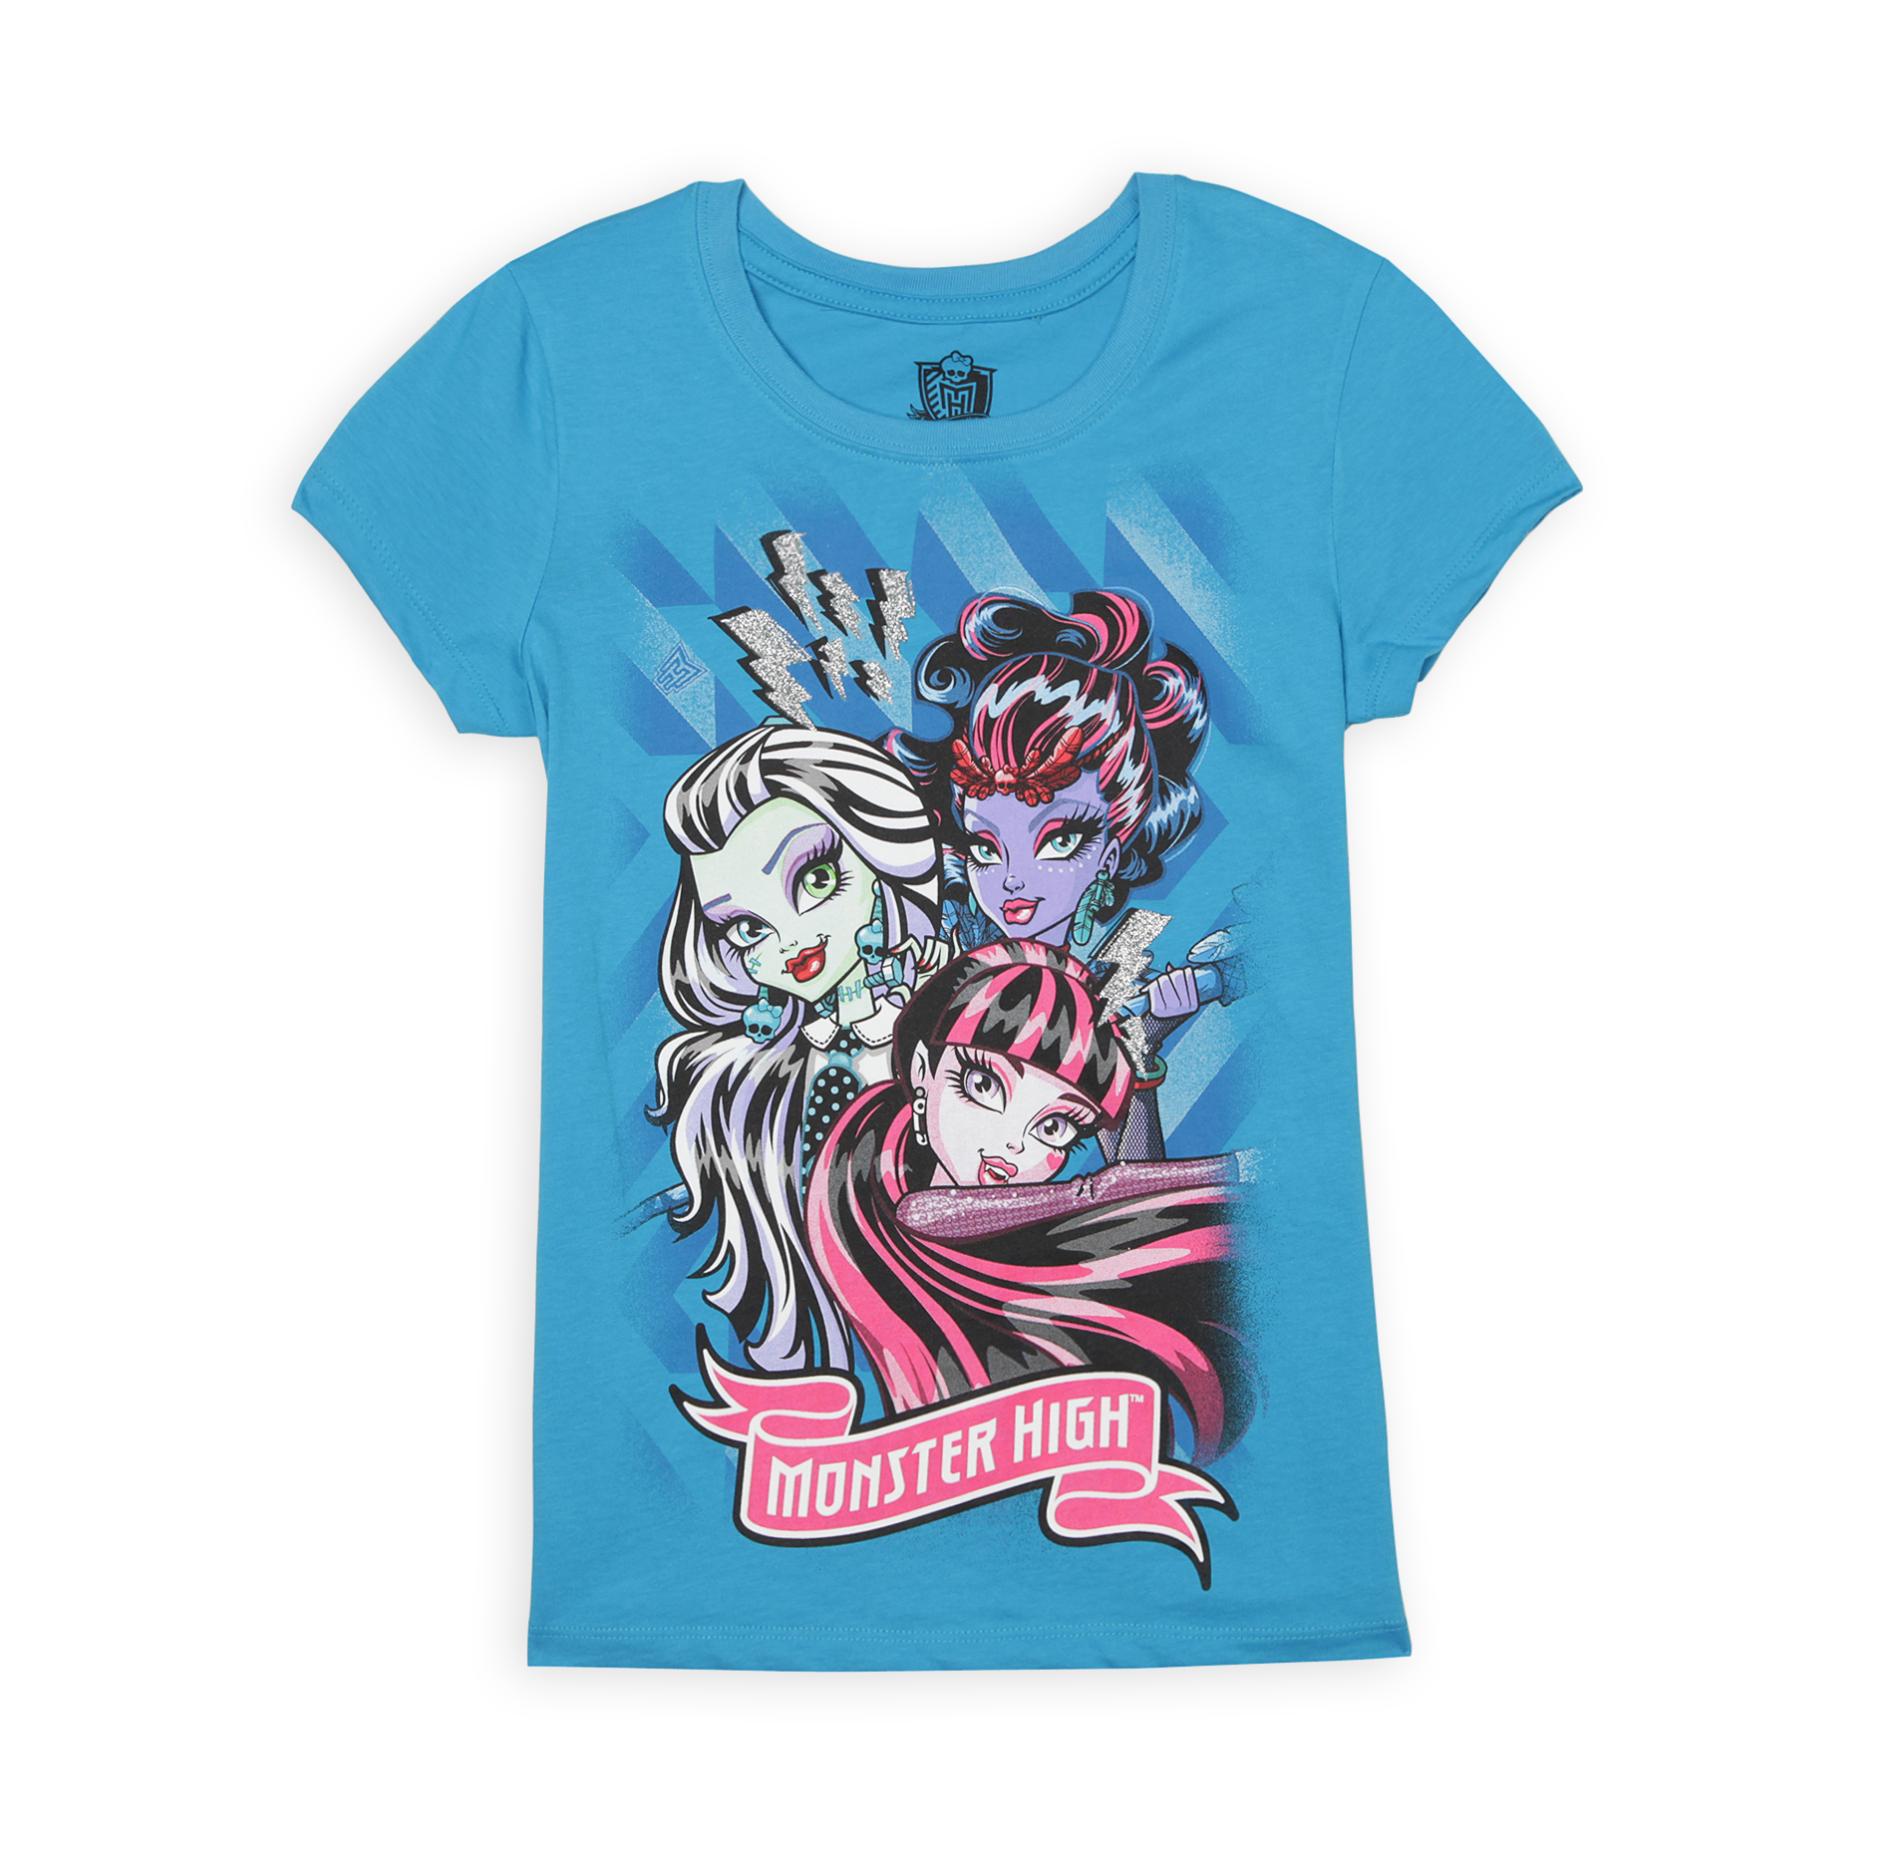 Monster High Girl's Cap-Sleeve Top